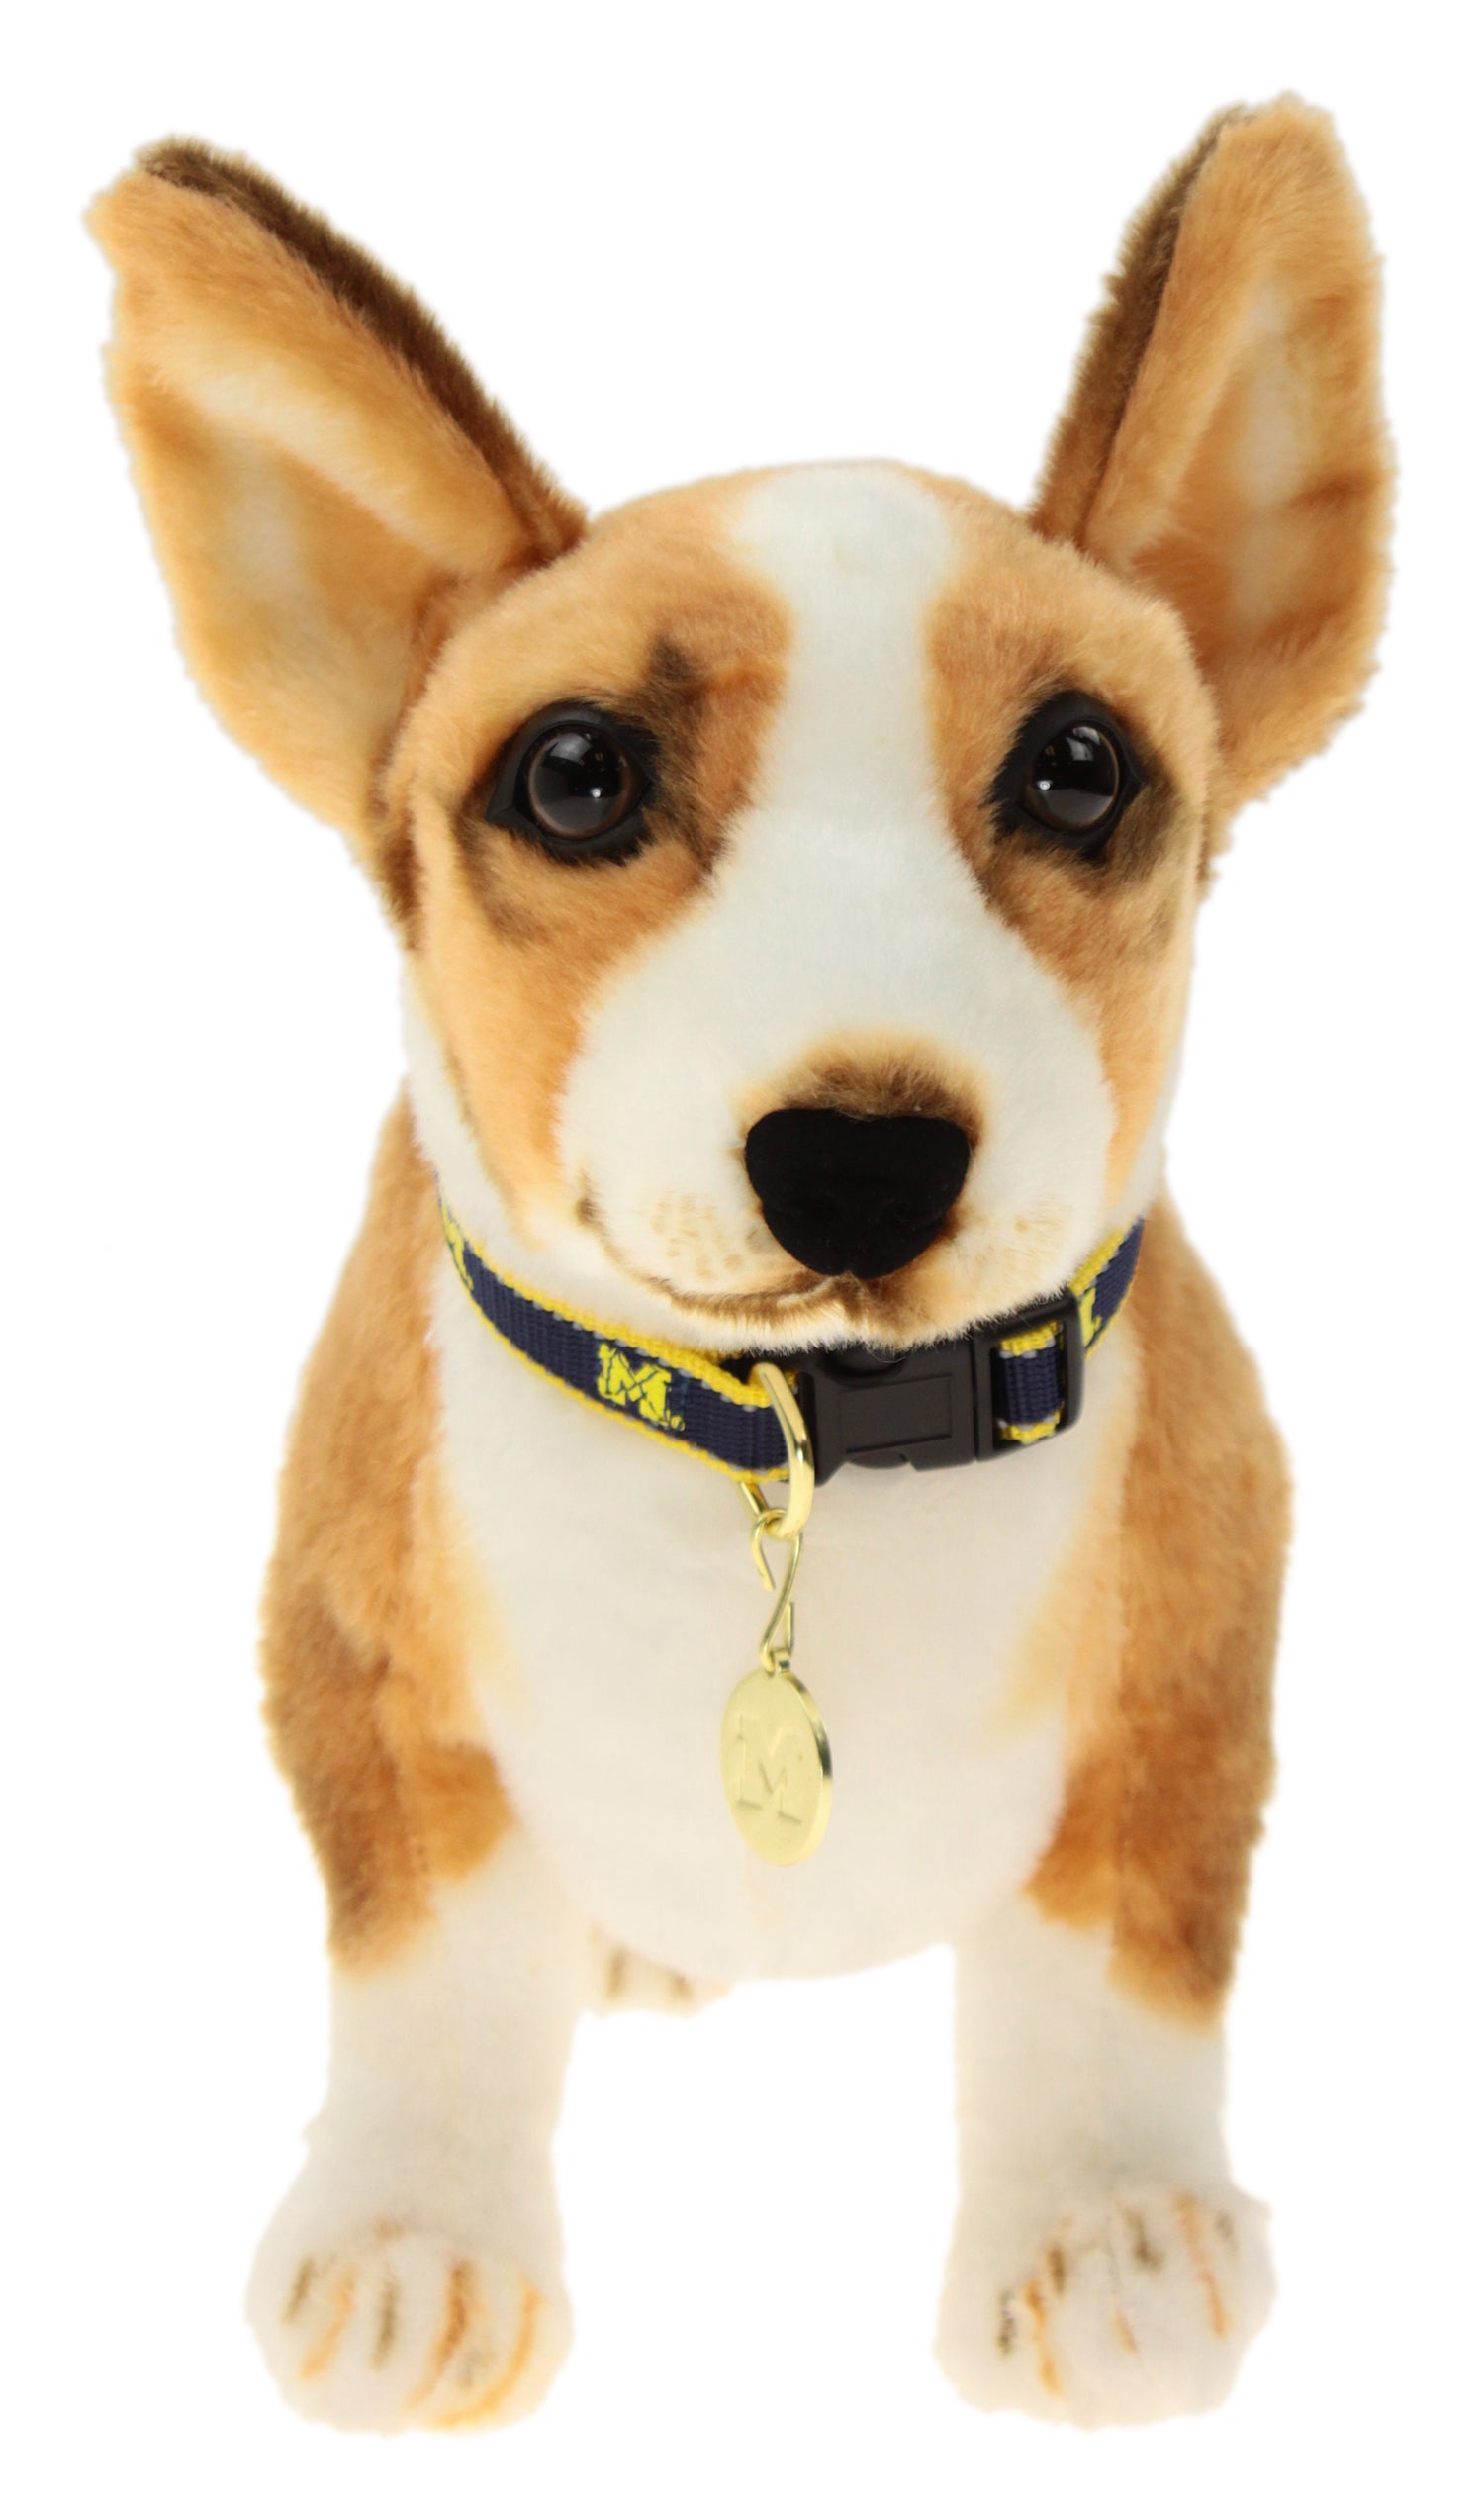  Tennessee Volunteers Ribbon Dog Collar - Large : Pet